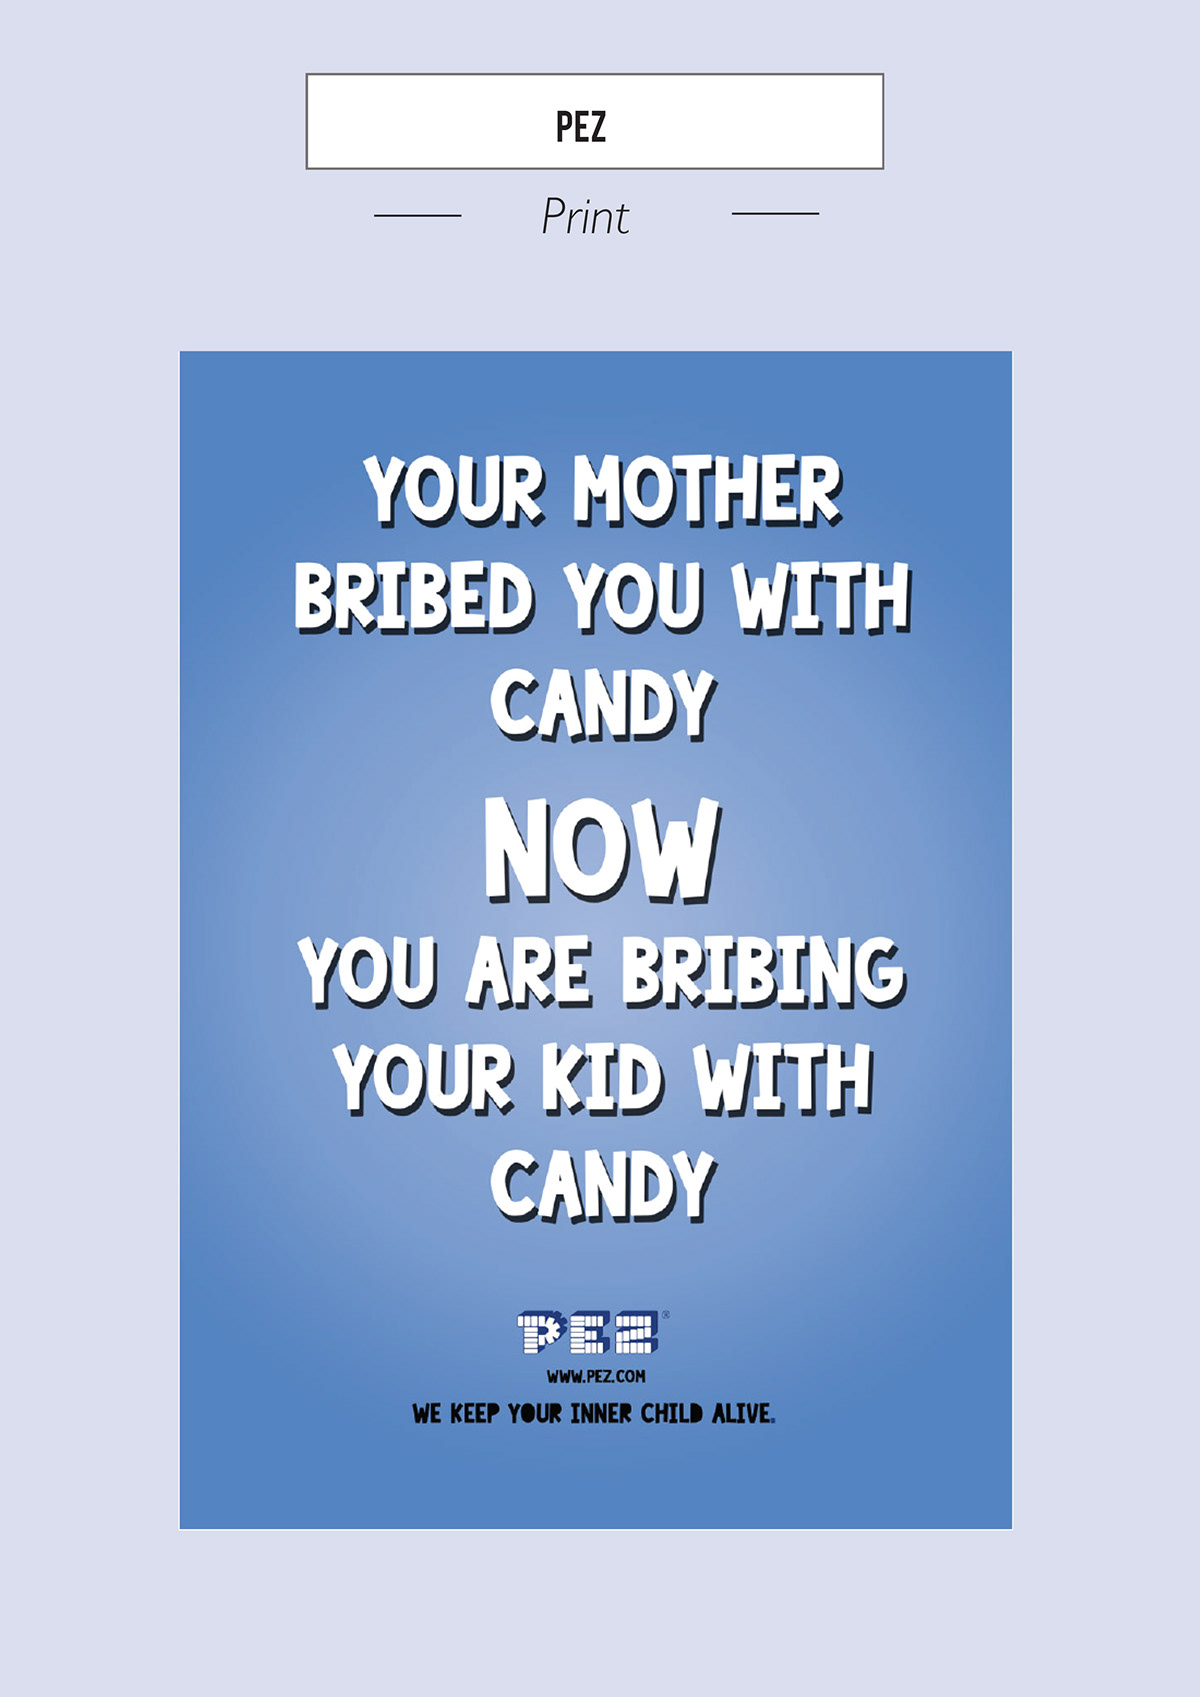 pez Candy print ads nostalgia memory lane bribes copy humor